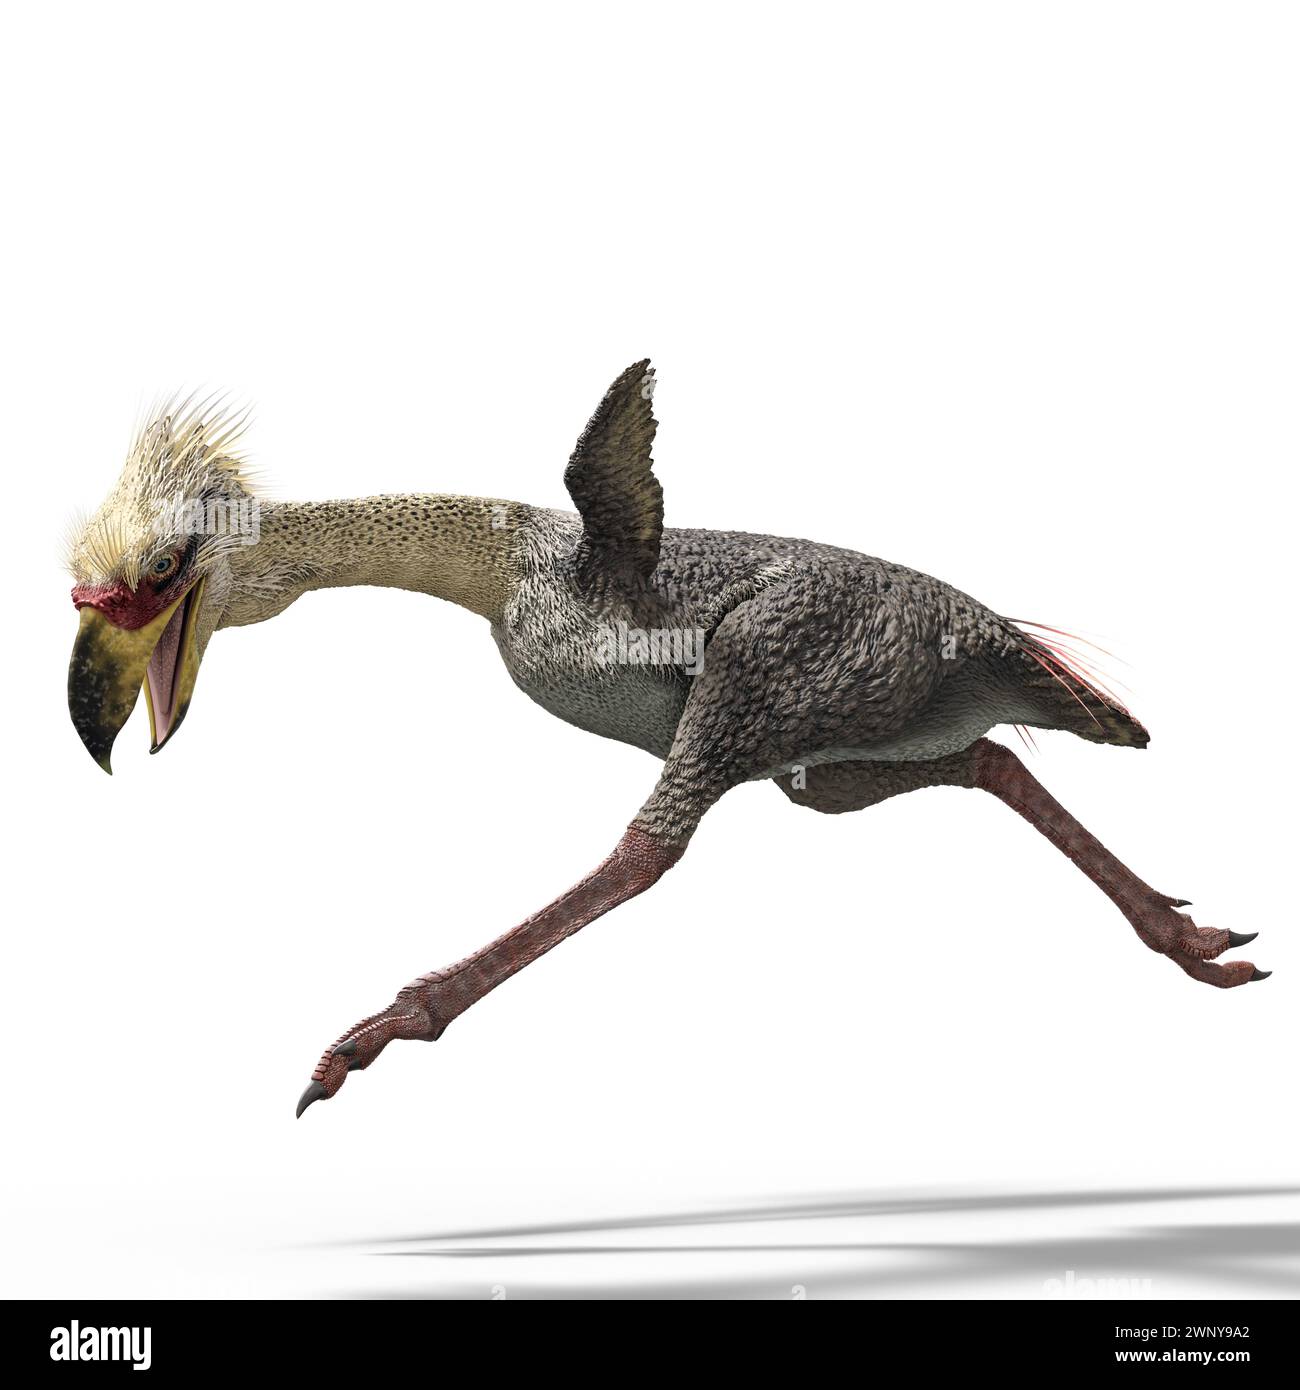 Phorusrhacos is an extinct genus of giant flightless terror birds that inhabited South America during the Miocene Stock Photo